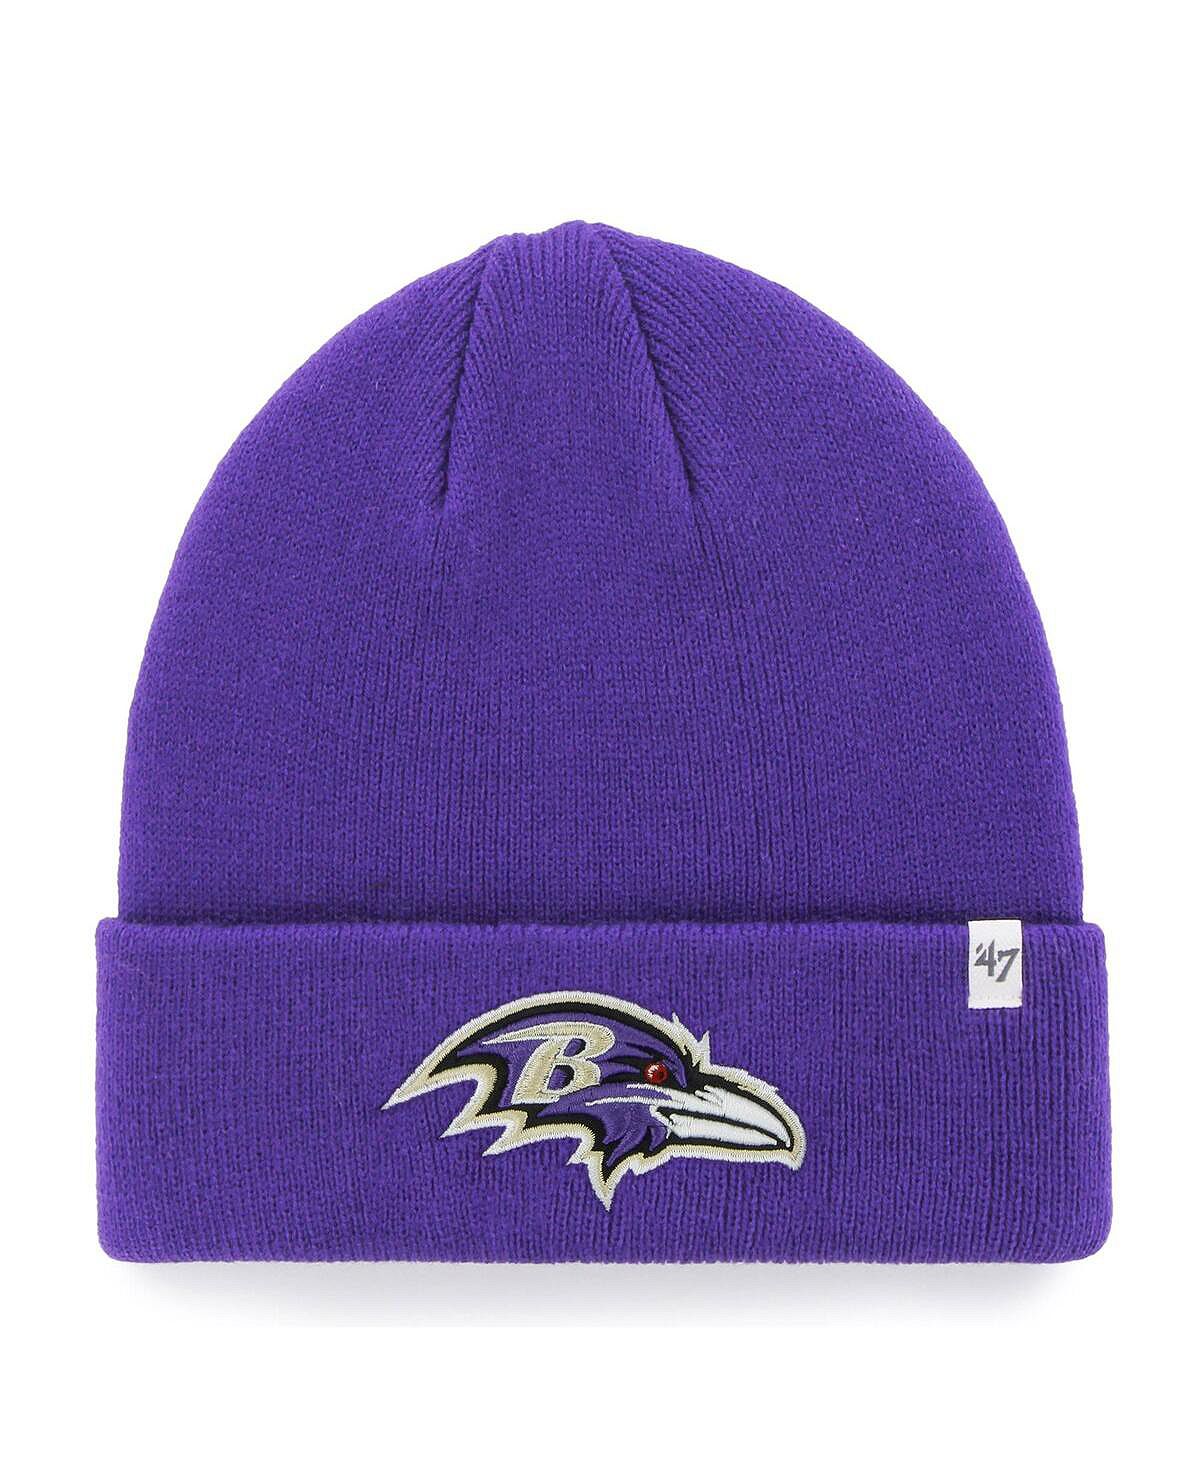 Мужская базовая вязаная шапка с манжетами '47 Baltimore Ravens среднего размера фиолетового цвета '47 Brand мужская базовая вязаная шапка с манжетами 47 baltimore ravens среднего размера фиолетового цвета 47 brand